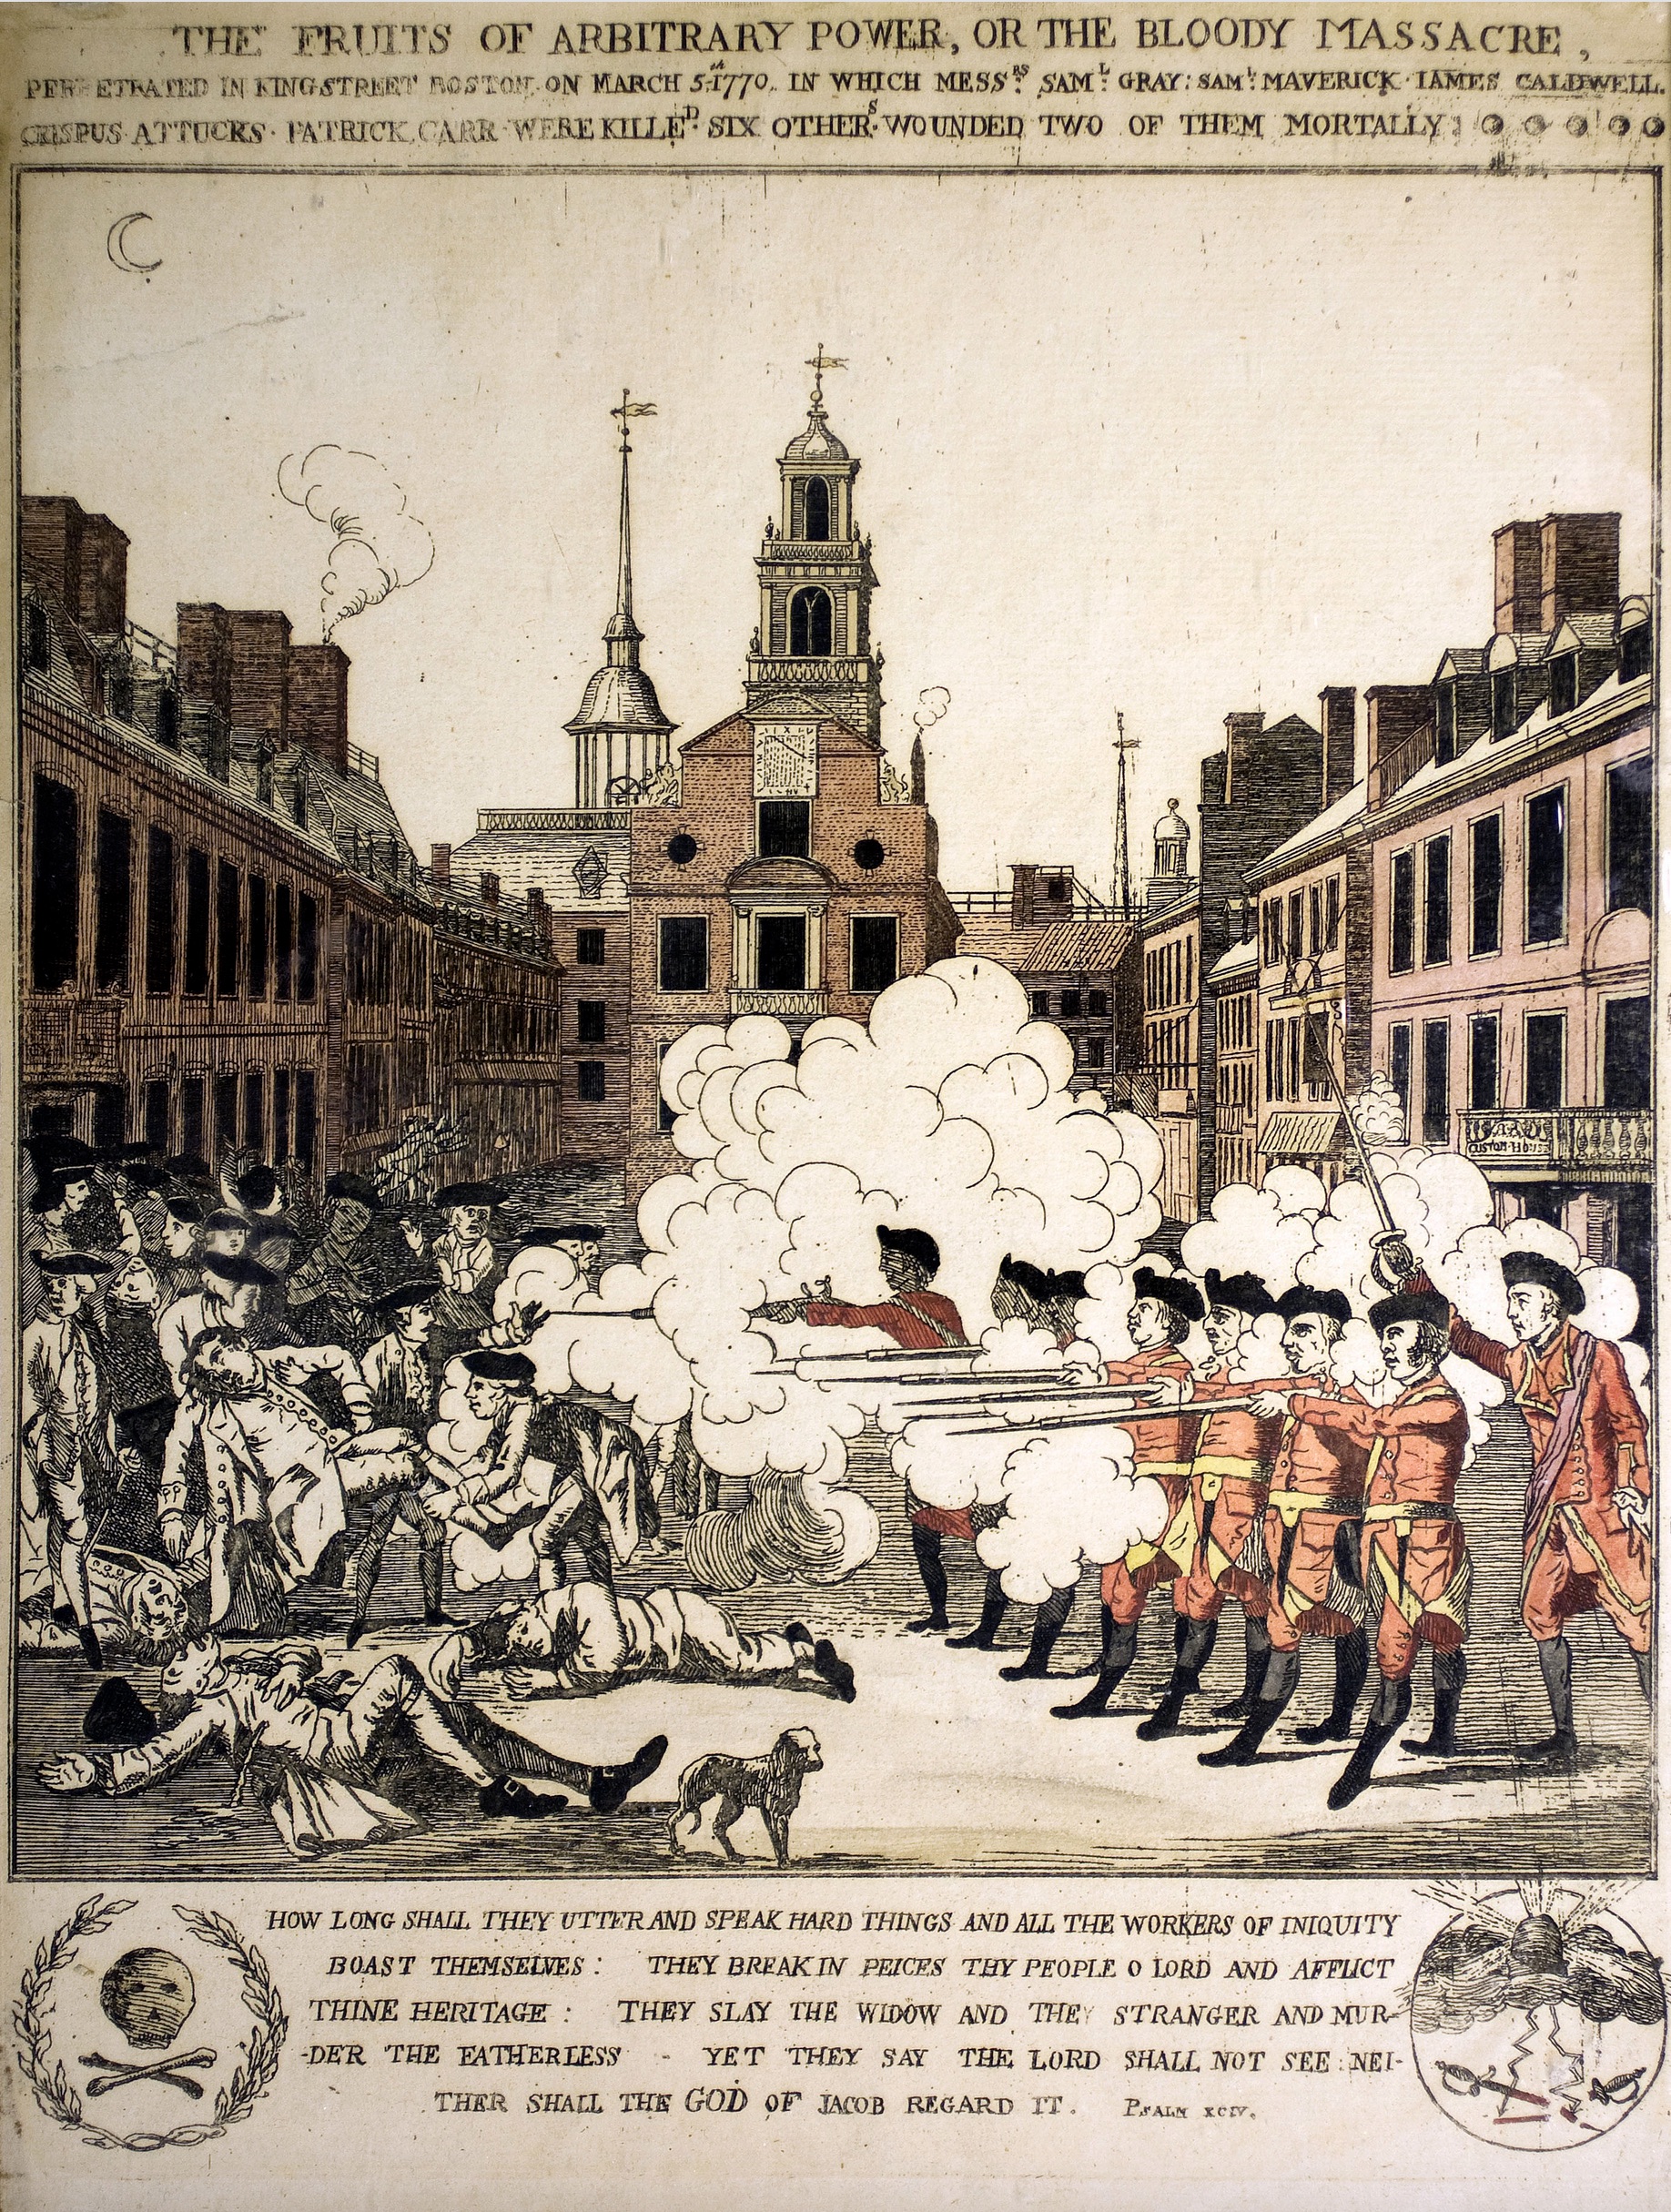 Henry Pelham's engraving of the Boston Massacre still offers us important lessons.